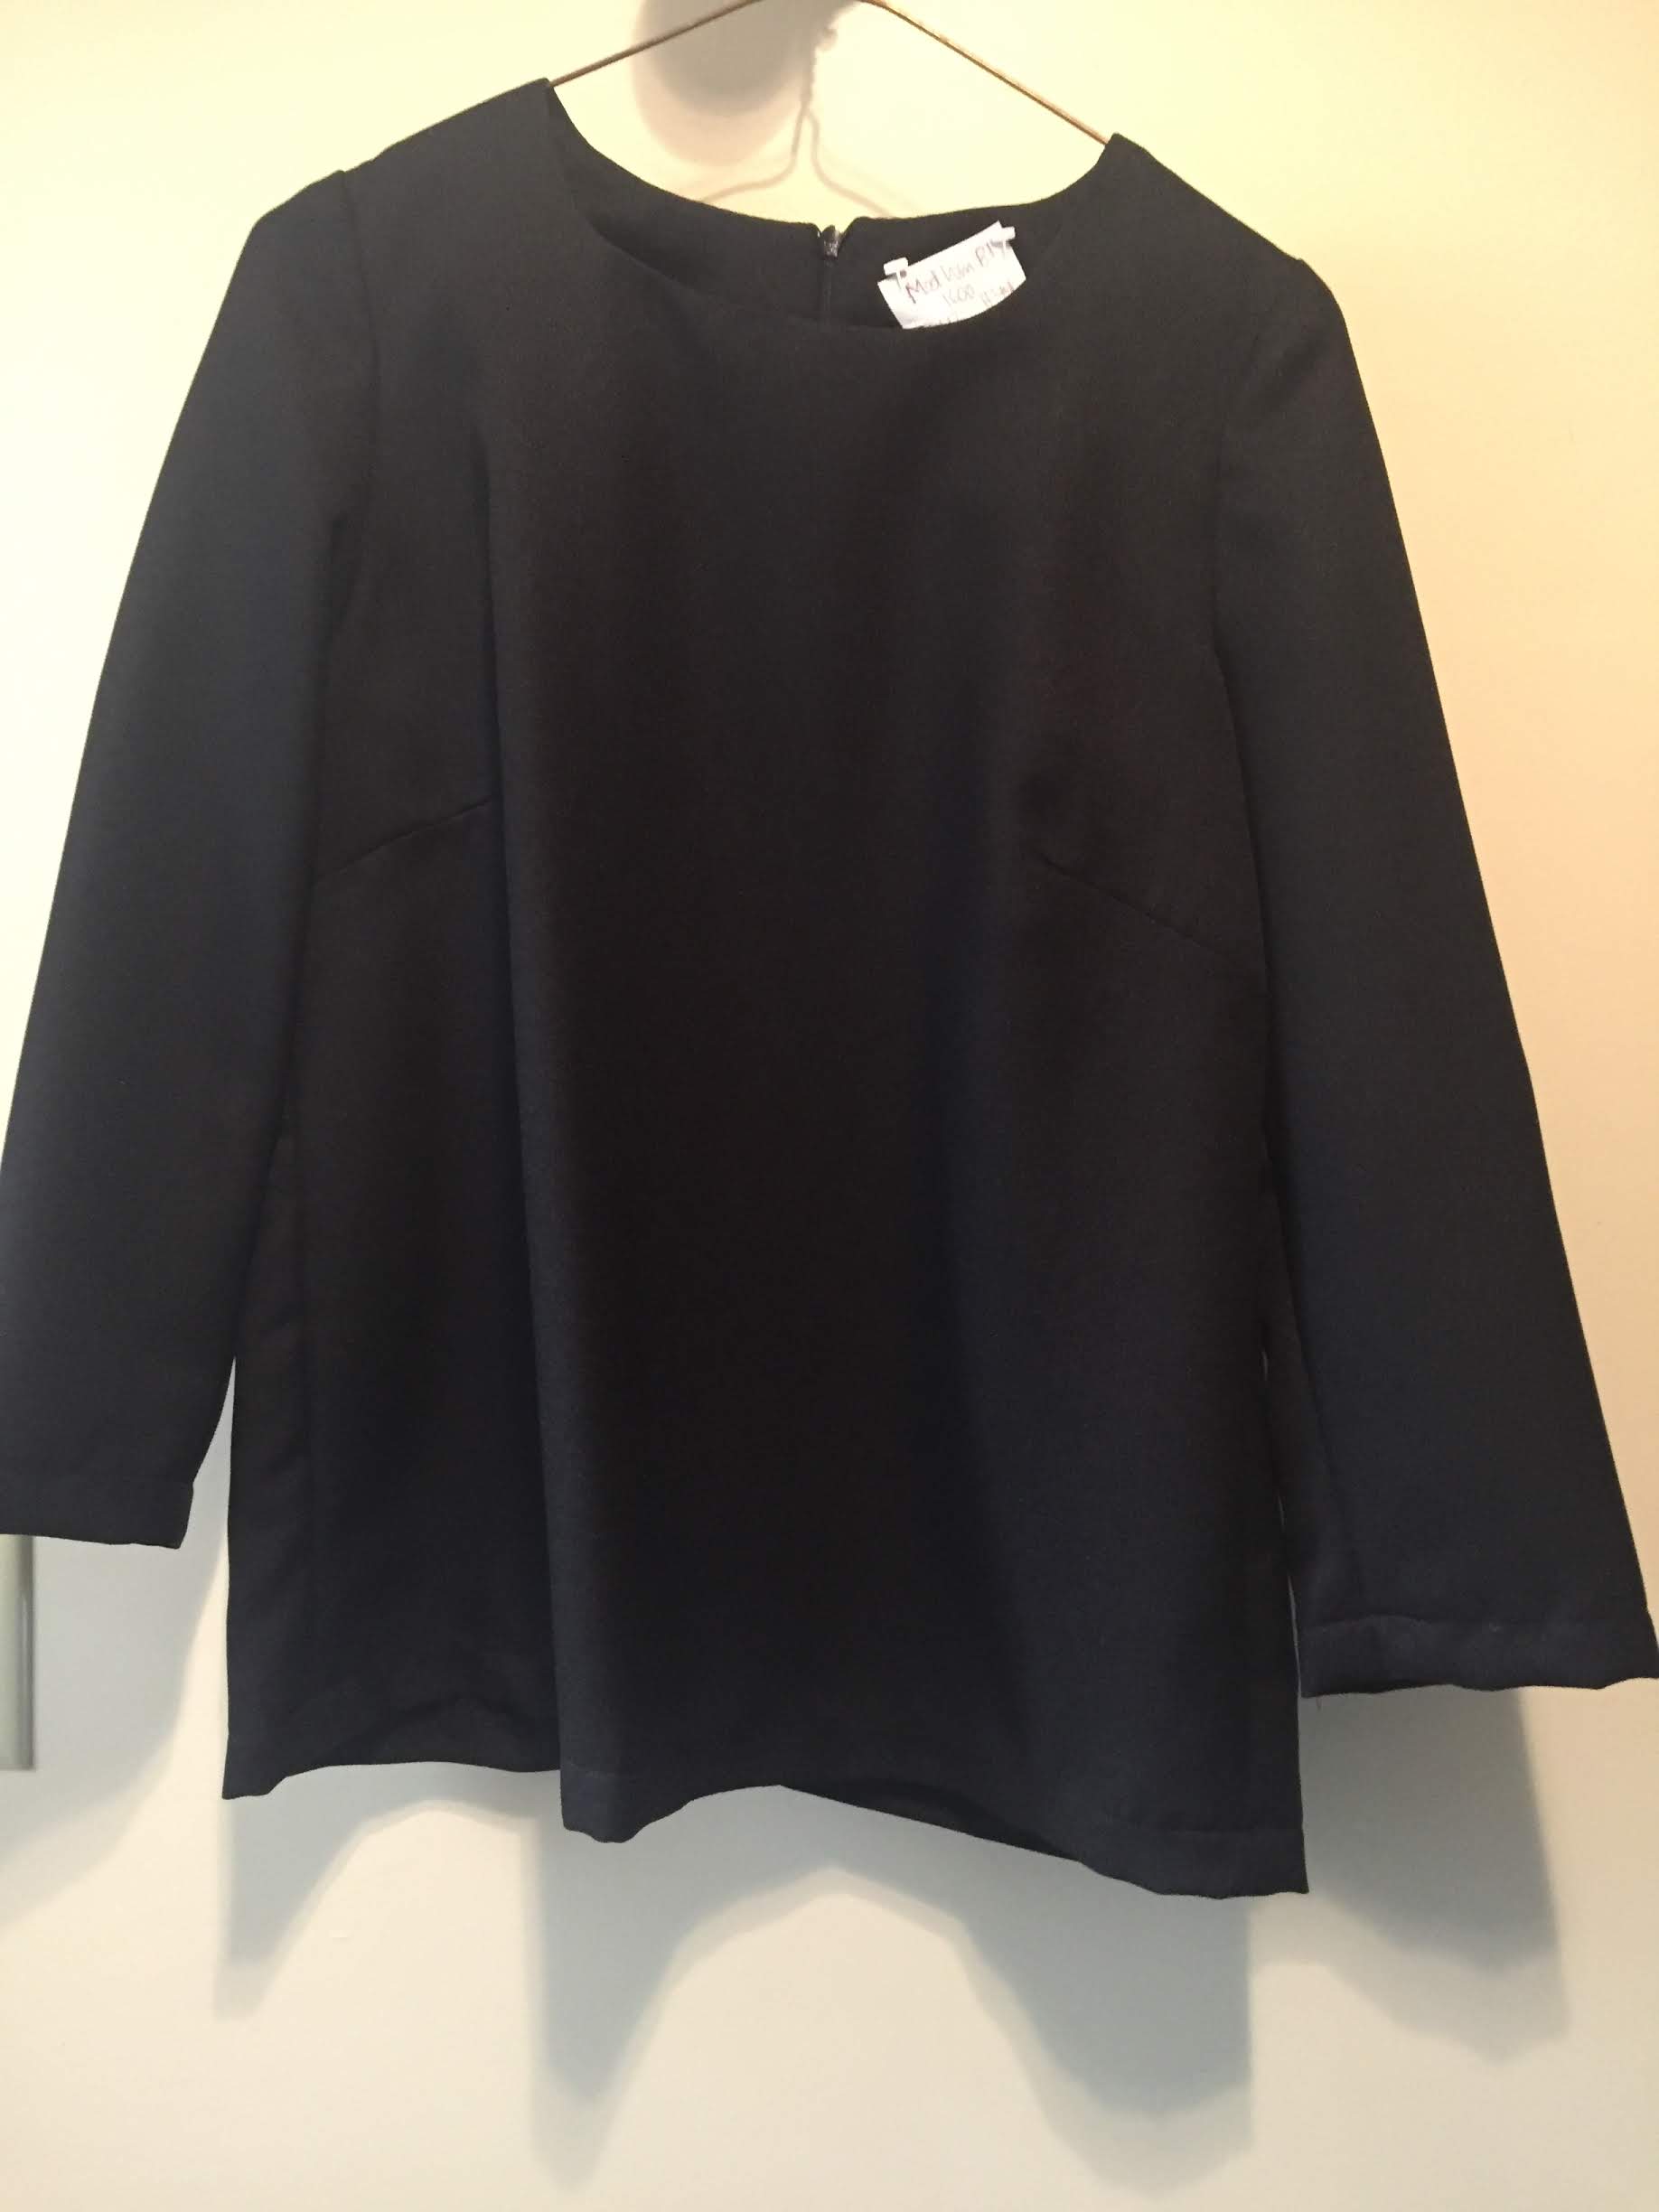 Black Modern Blouse-Mod Bl 1500-Chest 40 – Costume Cottage